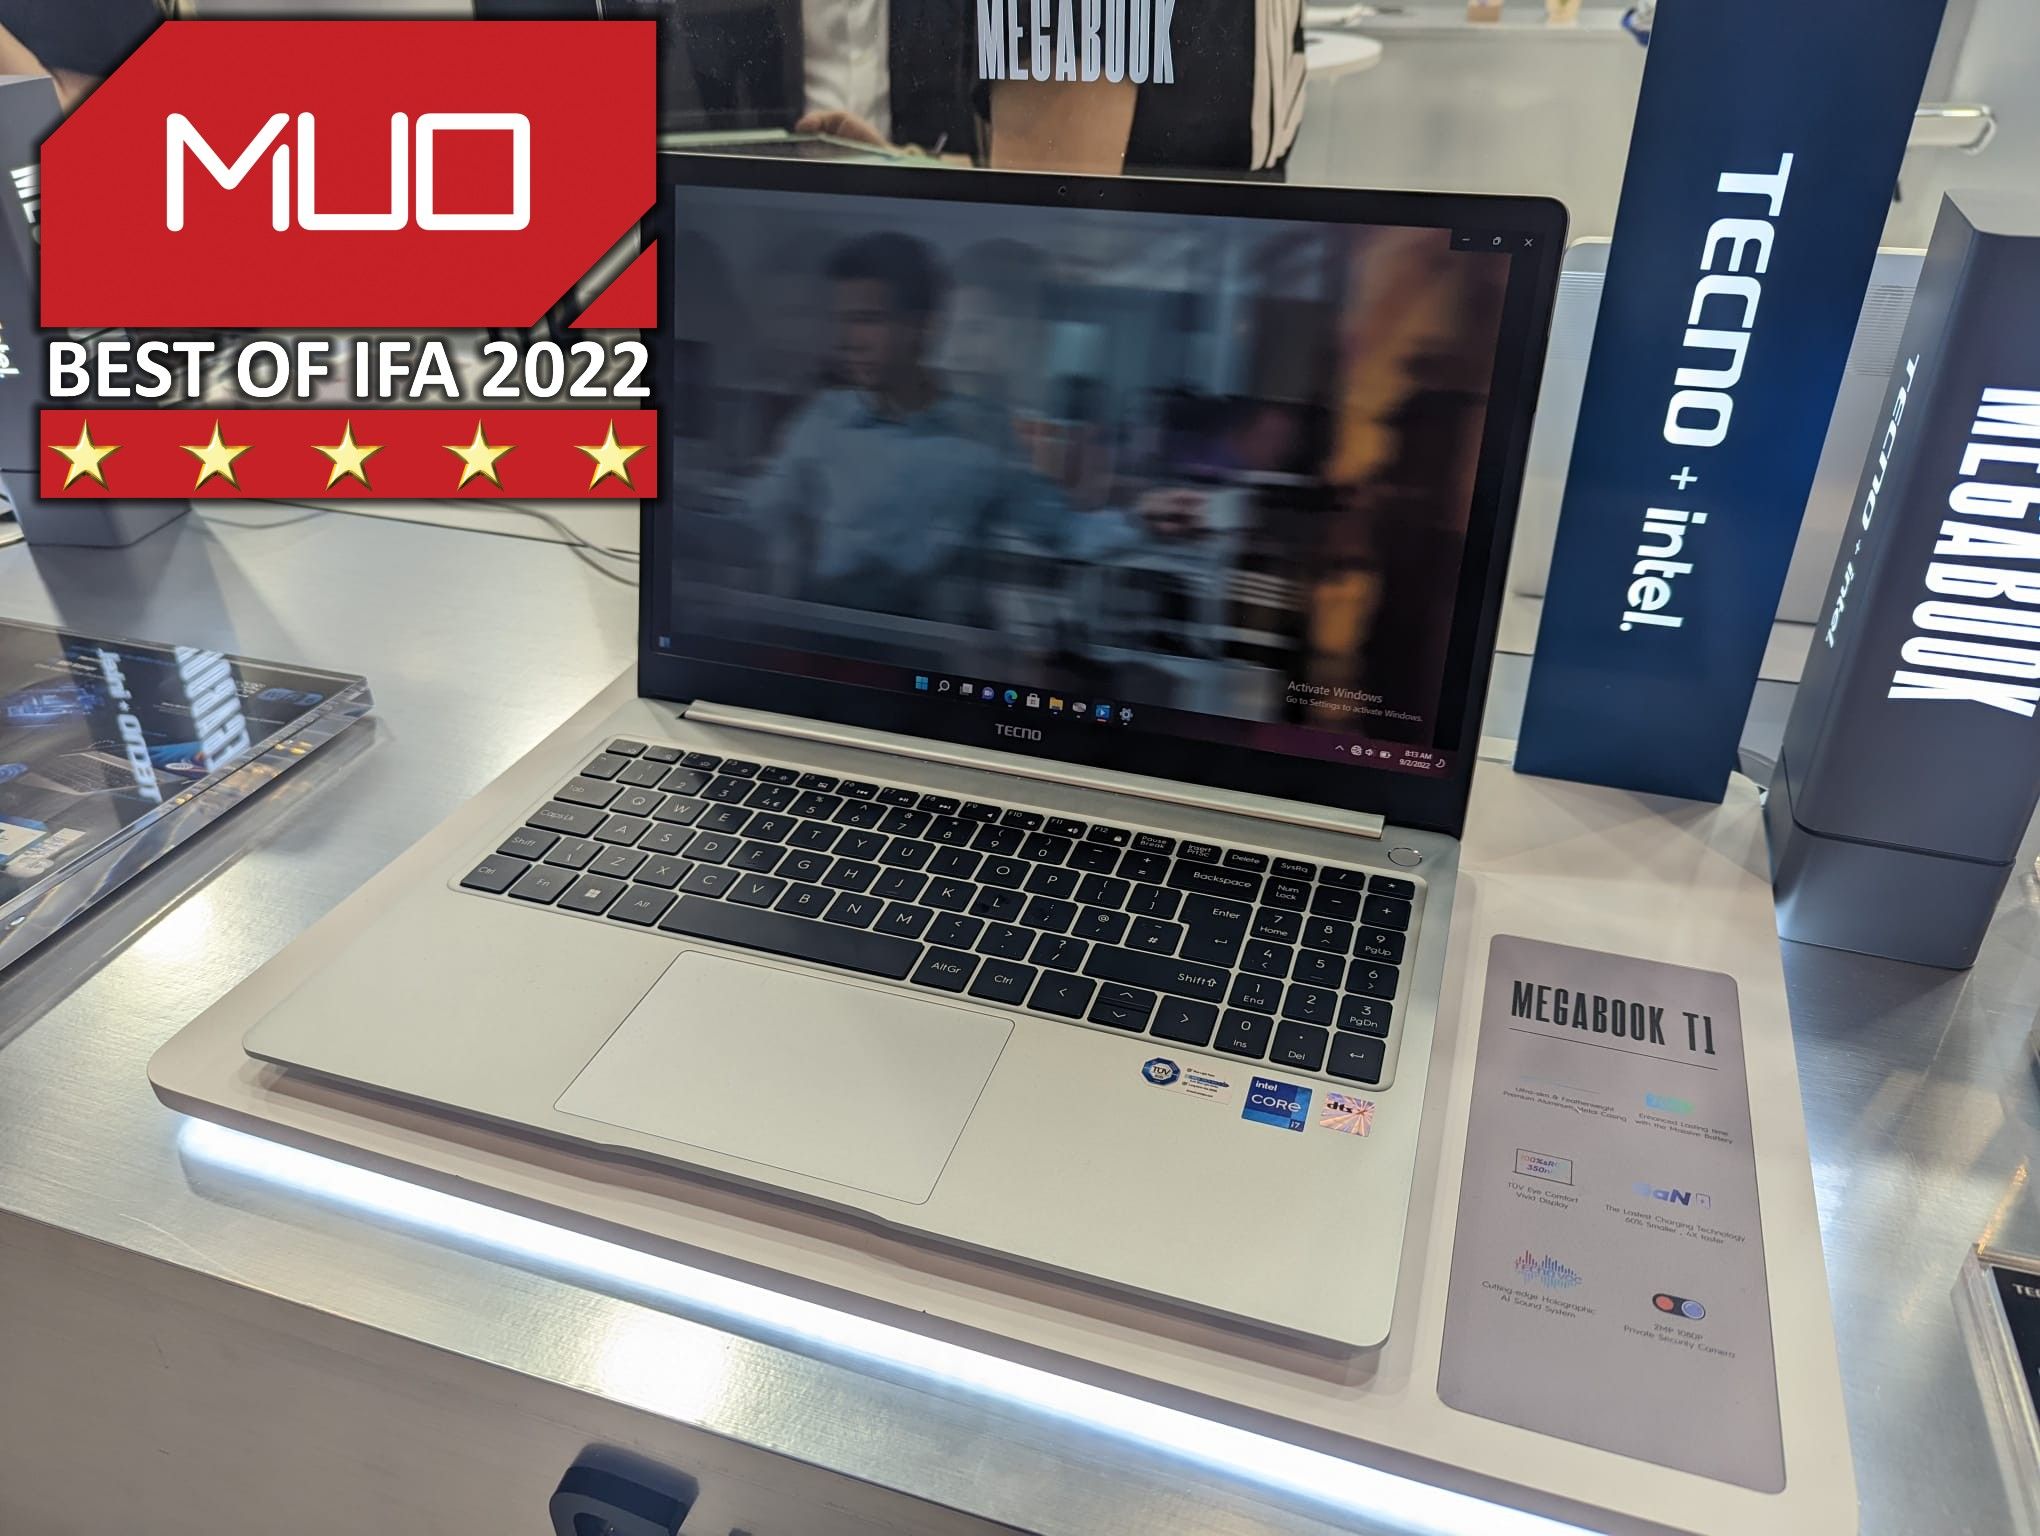 Tecno megabook t1 MUO IFA best budget laptop